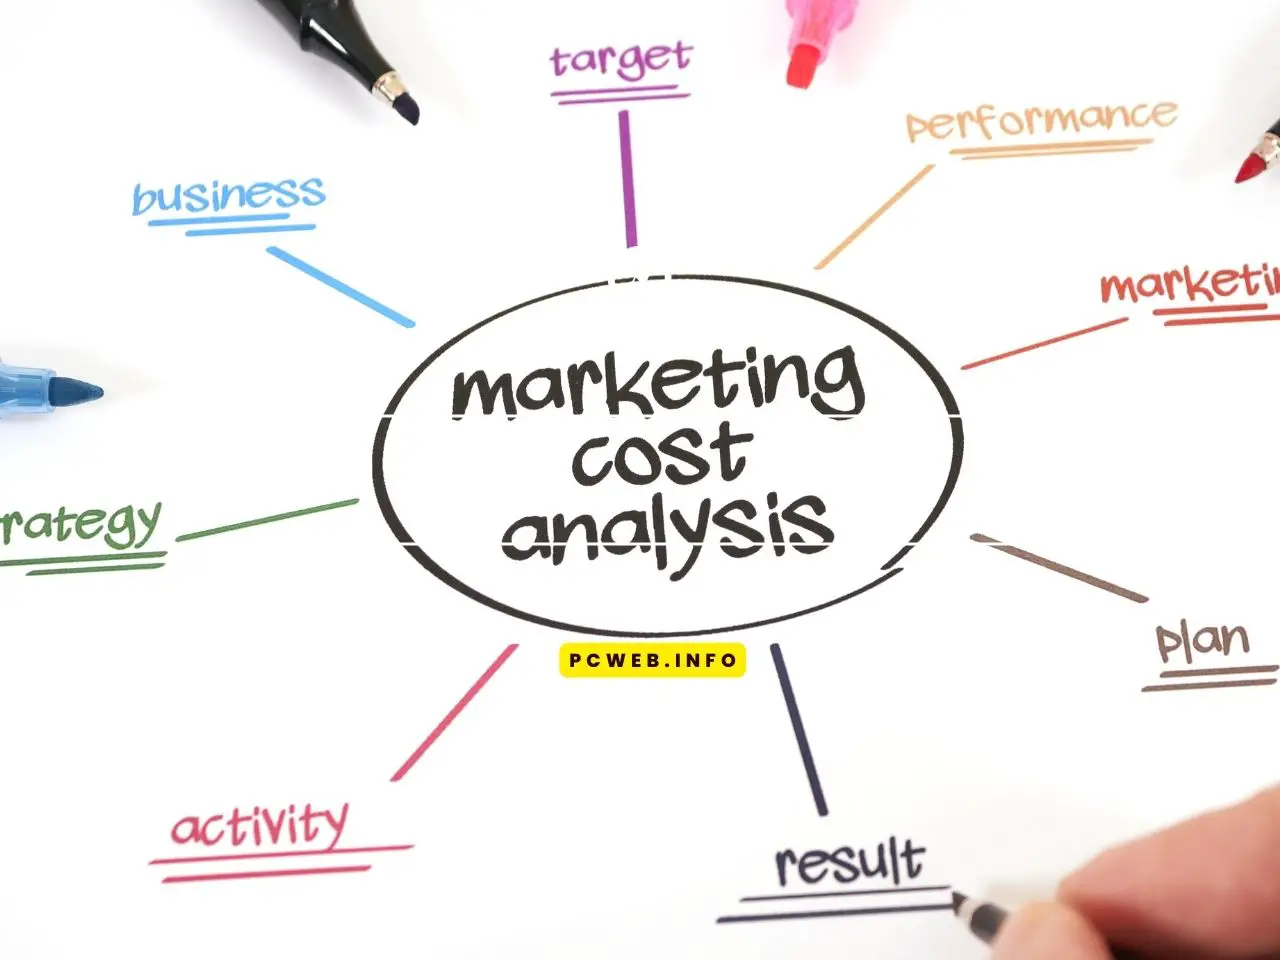 Marketing spend analysis